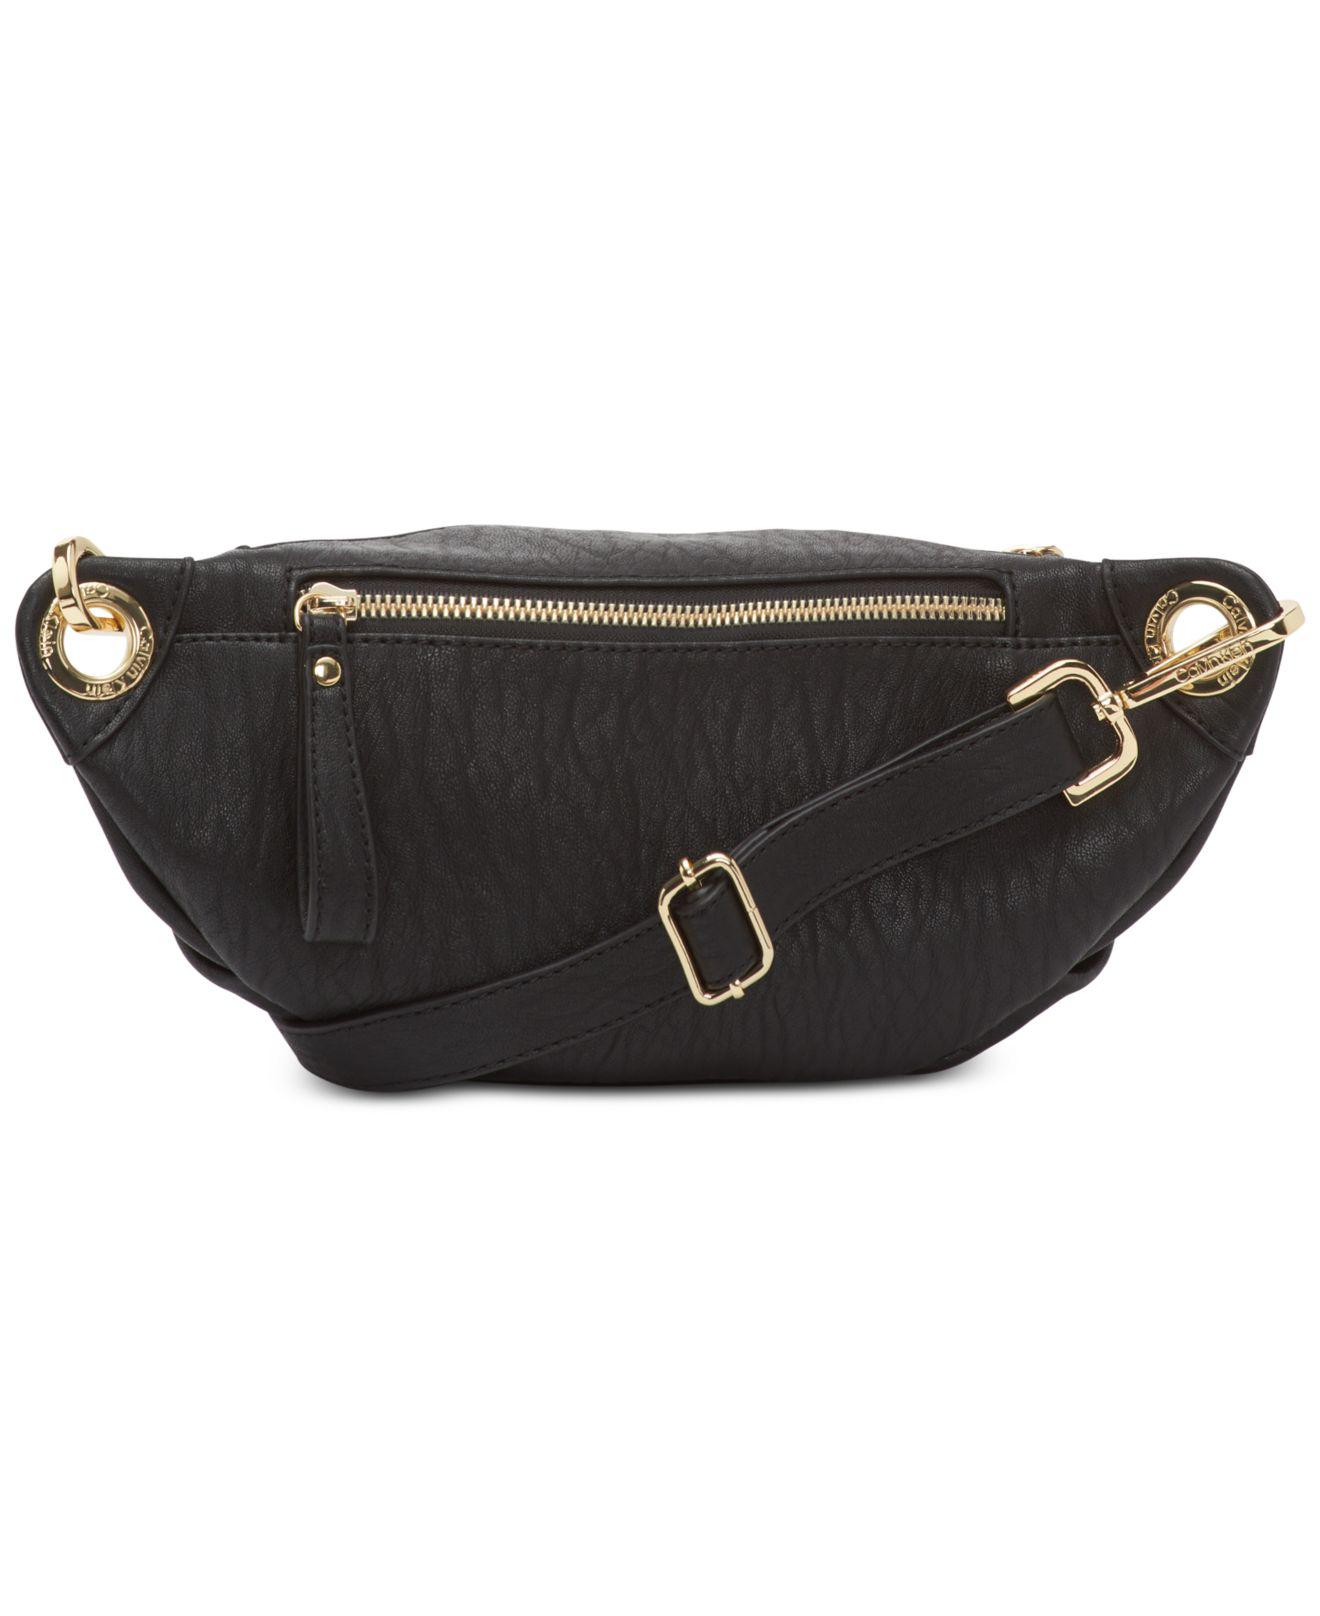 Calvin Klein Sonoma Belt Bag in Black/Gold (Black) - Lyst